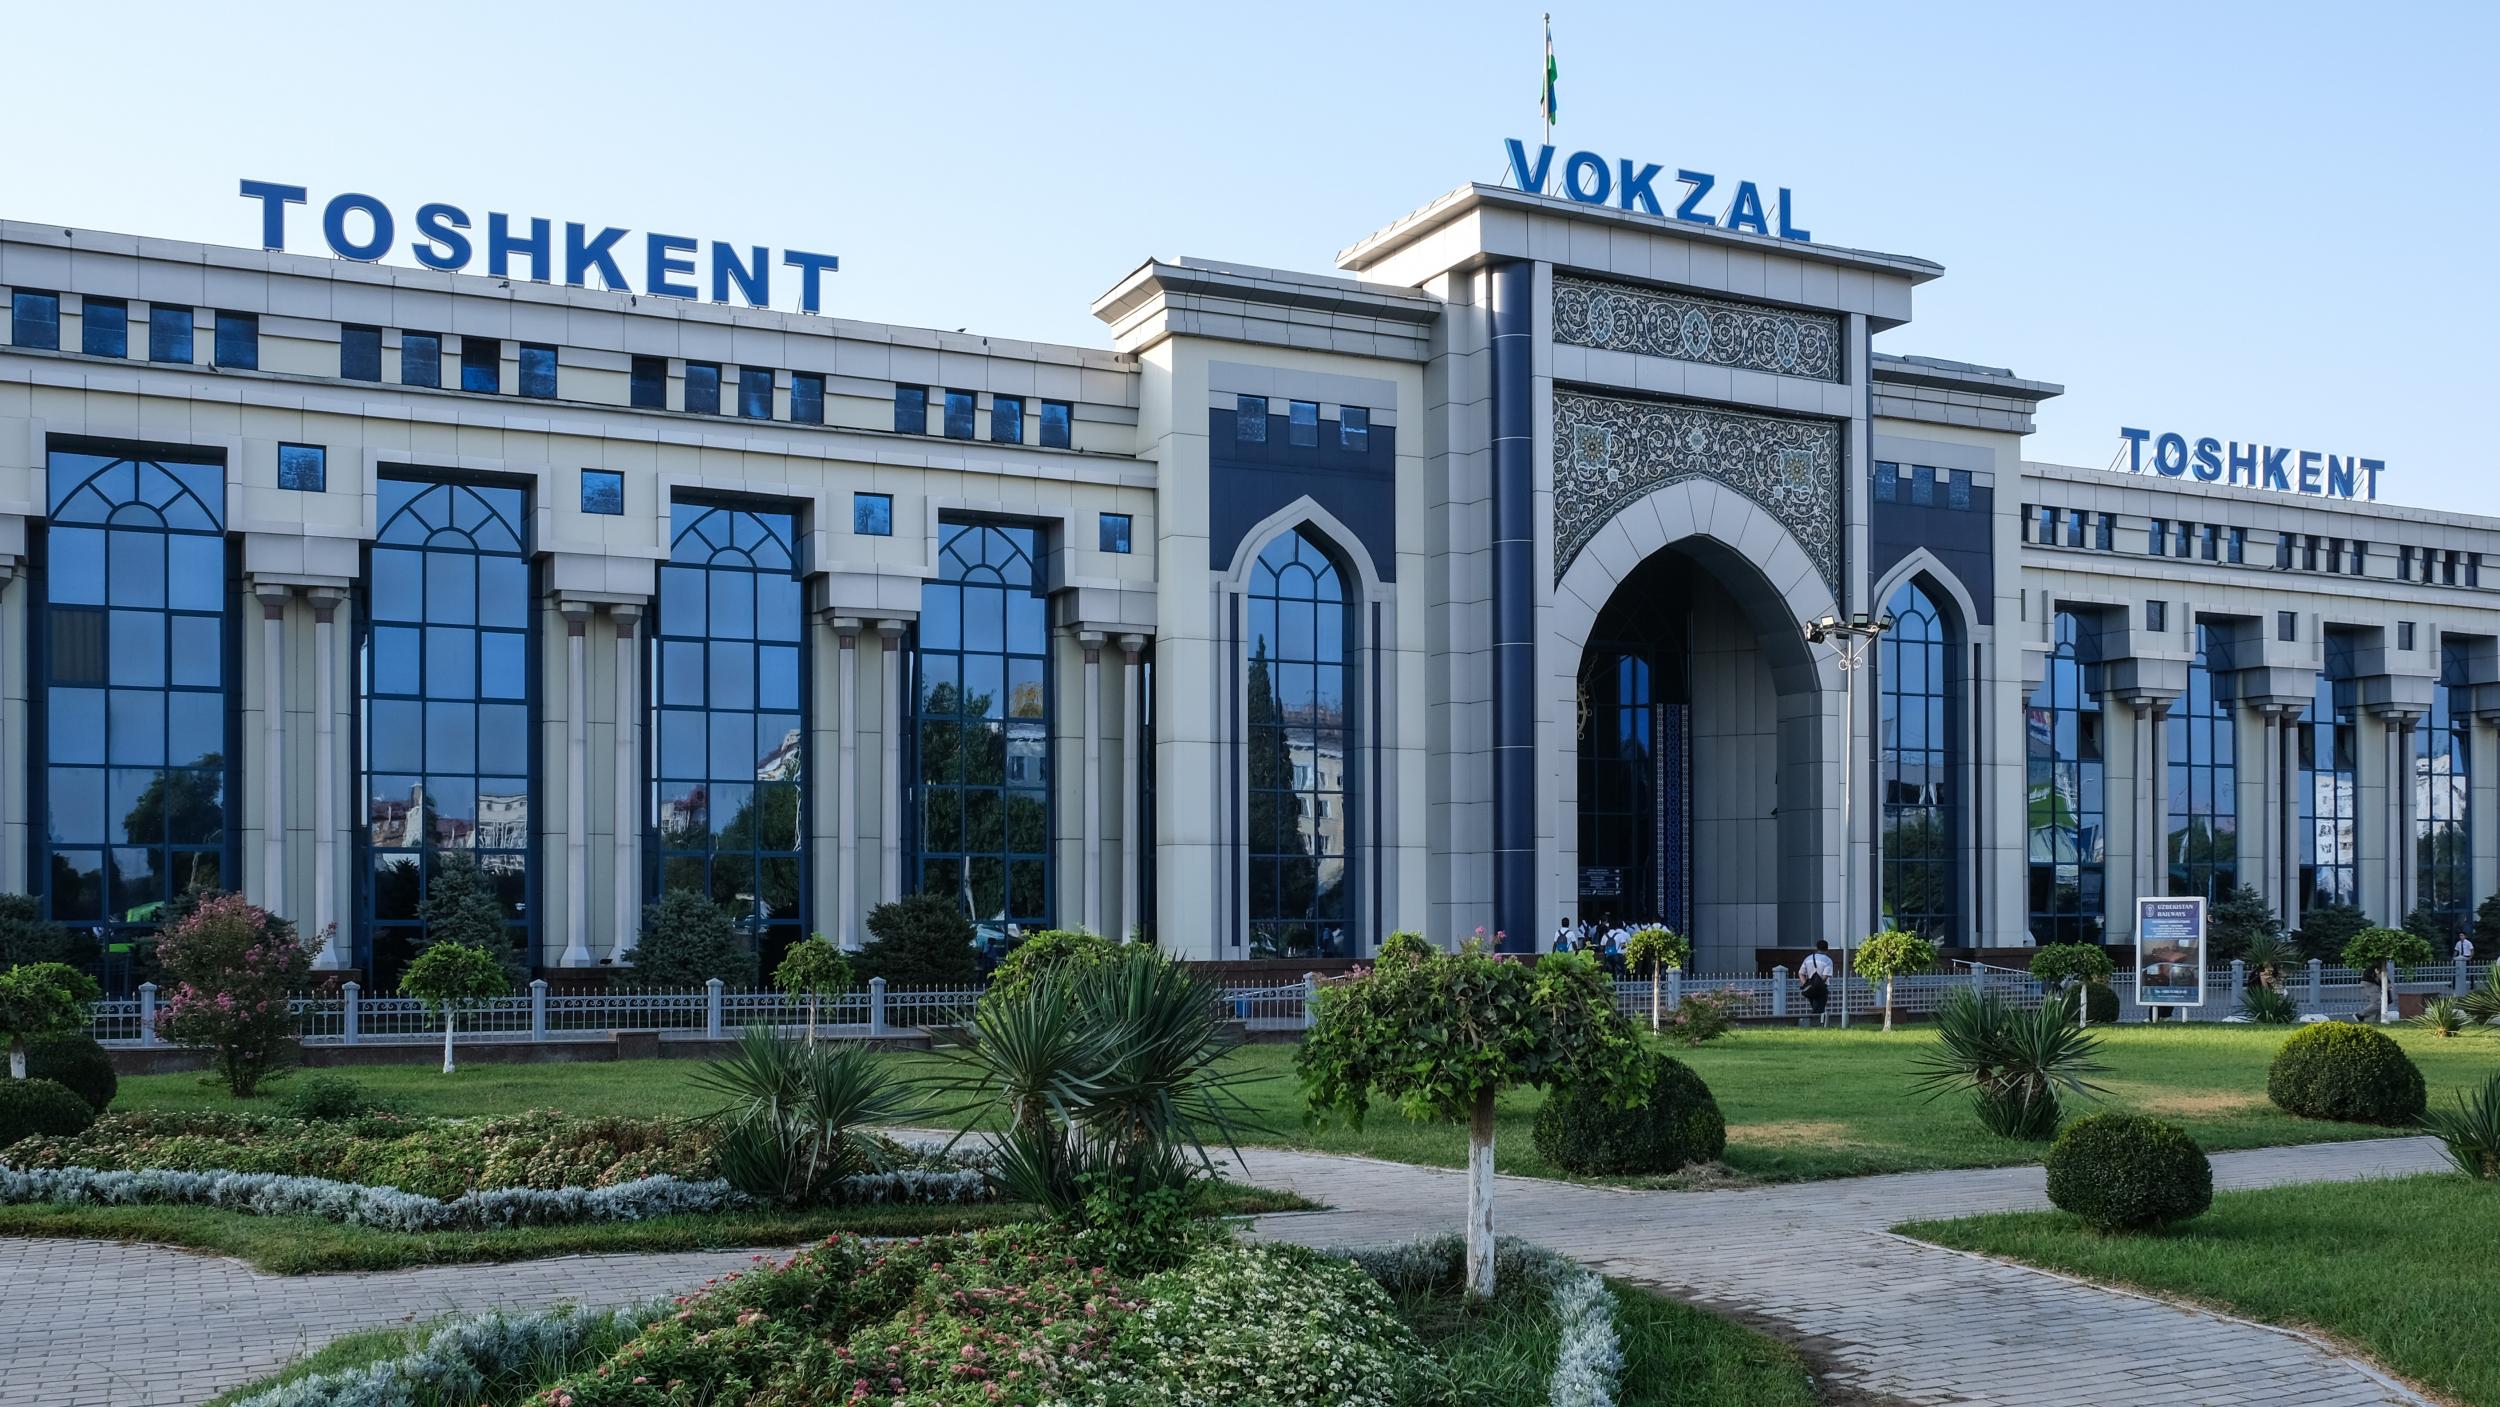 The Tashkent train station